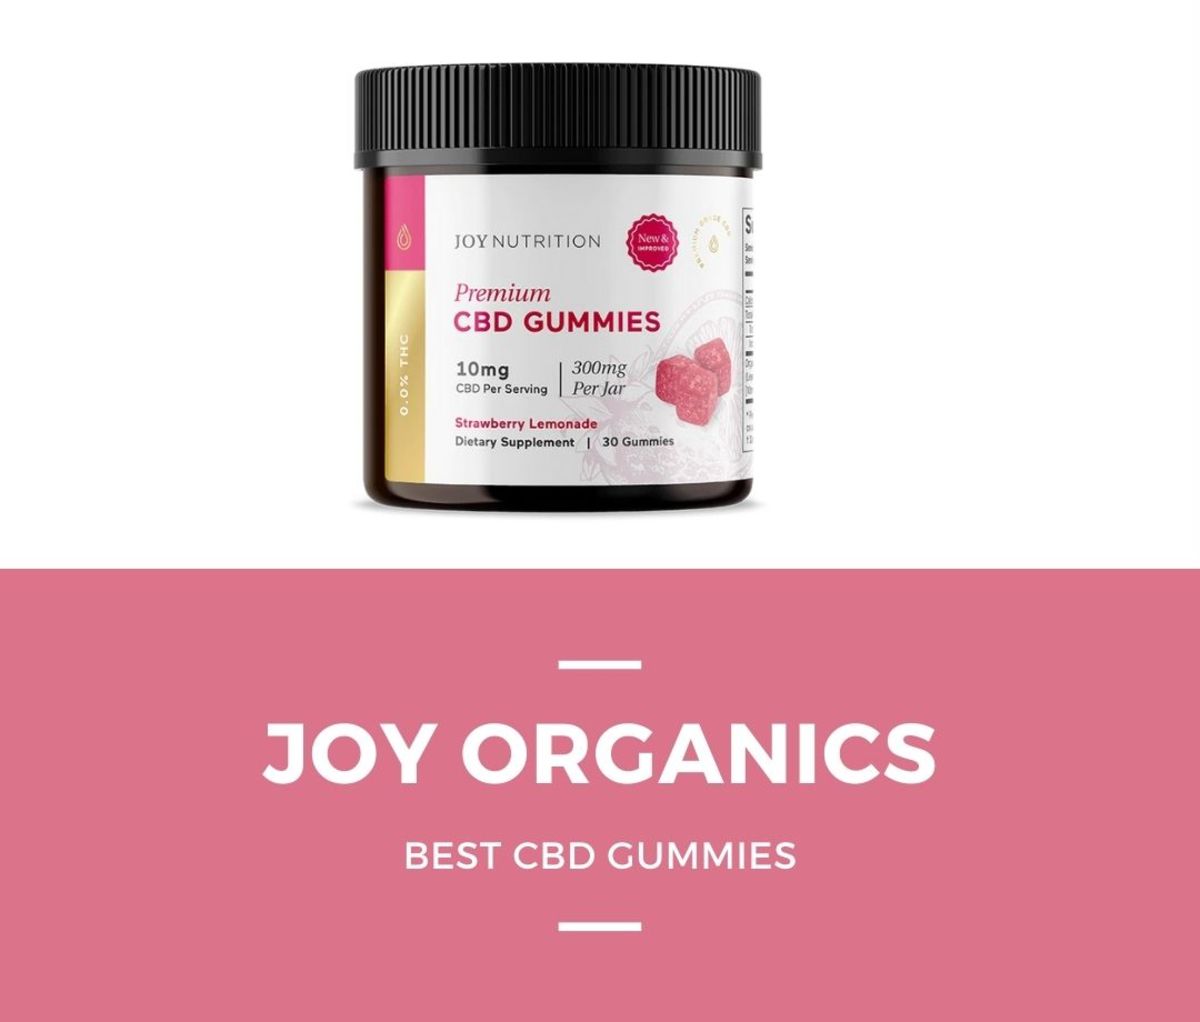 9. Joy Organics – Best USDA Organic CBD Gummies